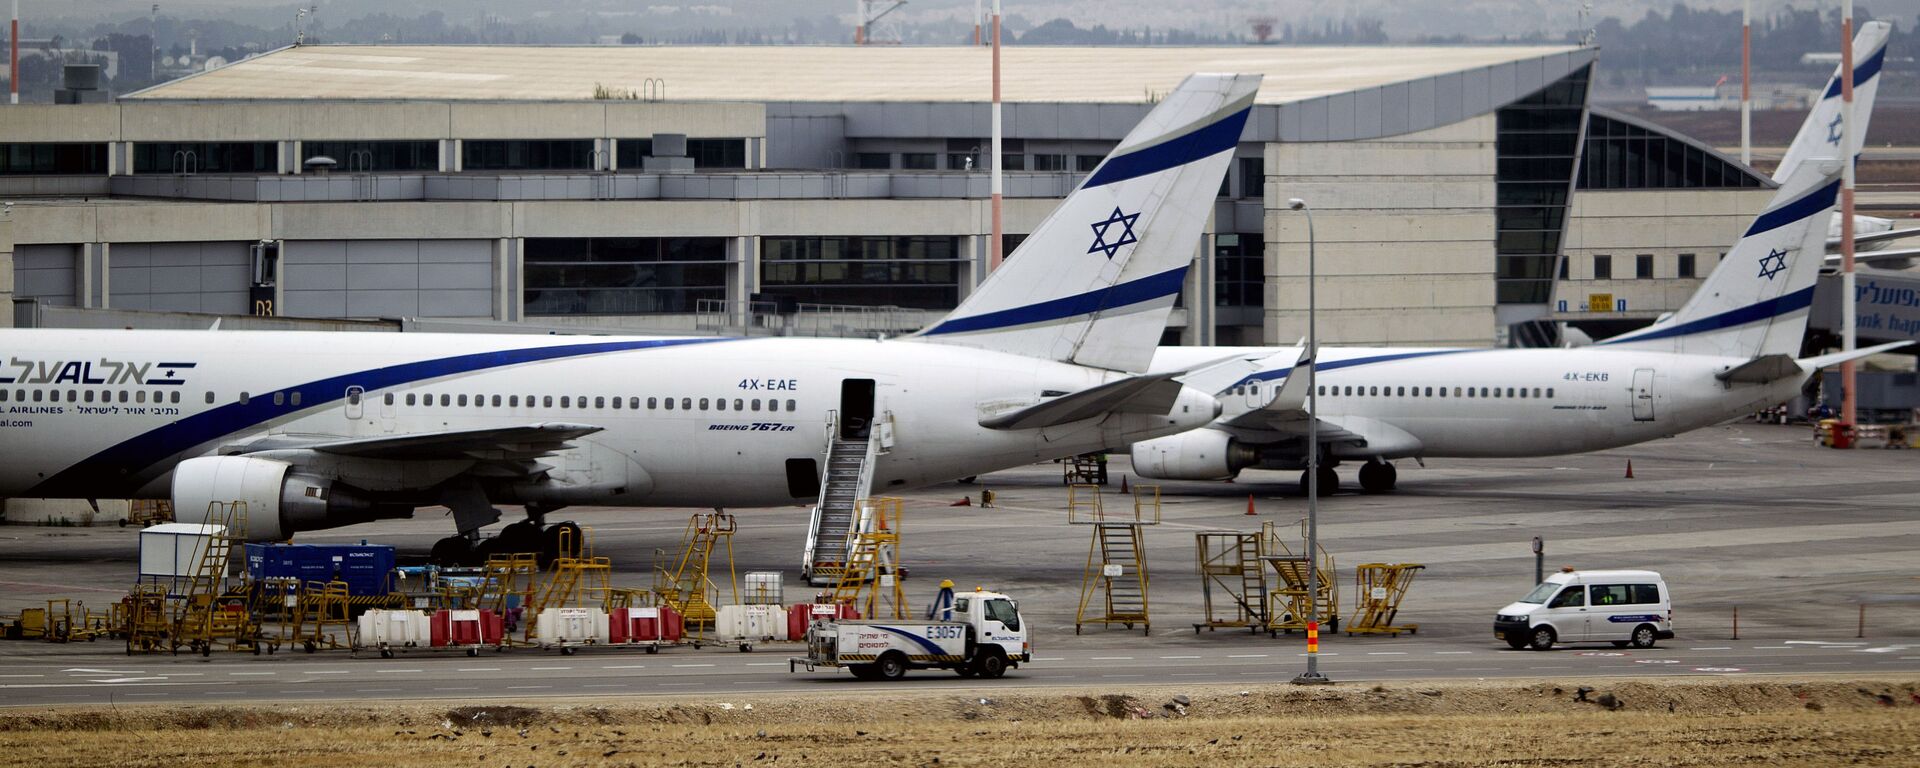 مطار بن غوريون الدولي في تل أبيب، إسرائيل 21 أبريل/ نيسان 2013 - سبوتنيك عربي, 1920, 13.05.2021